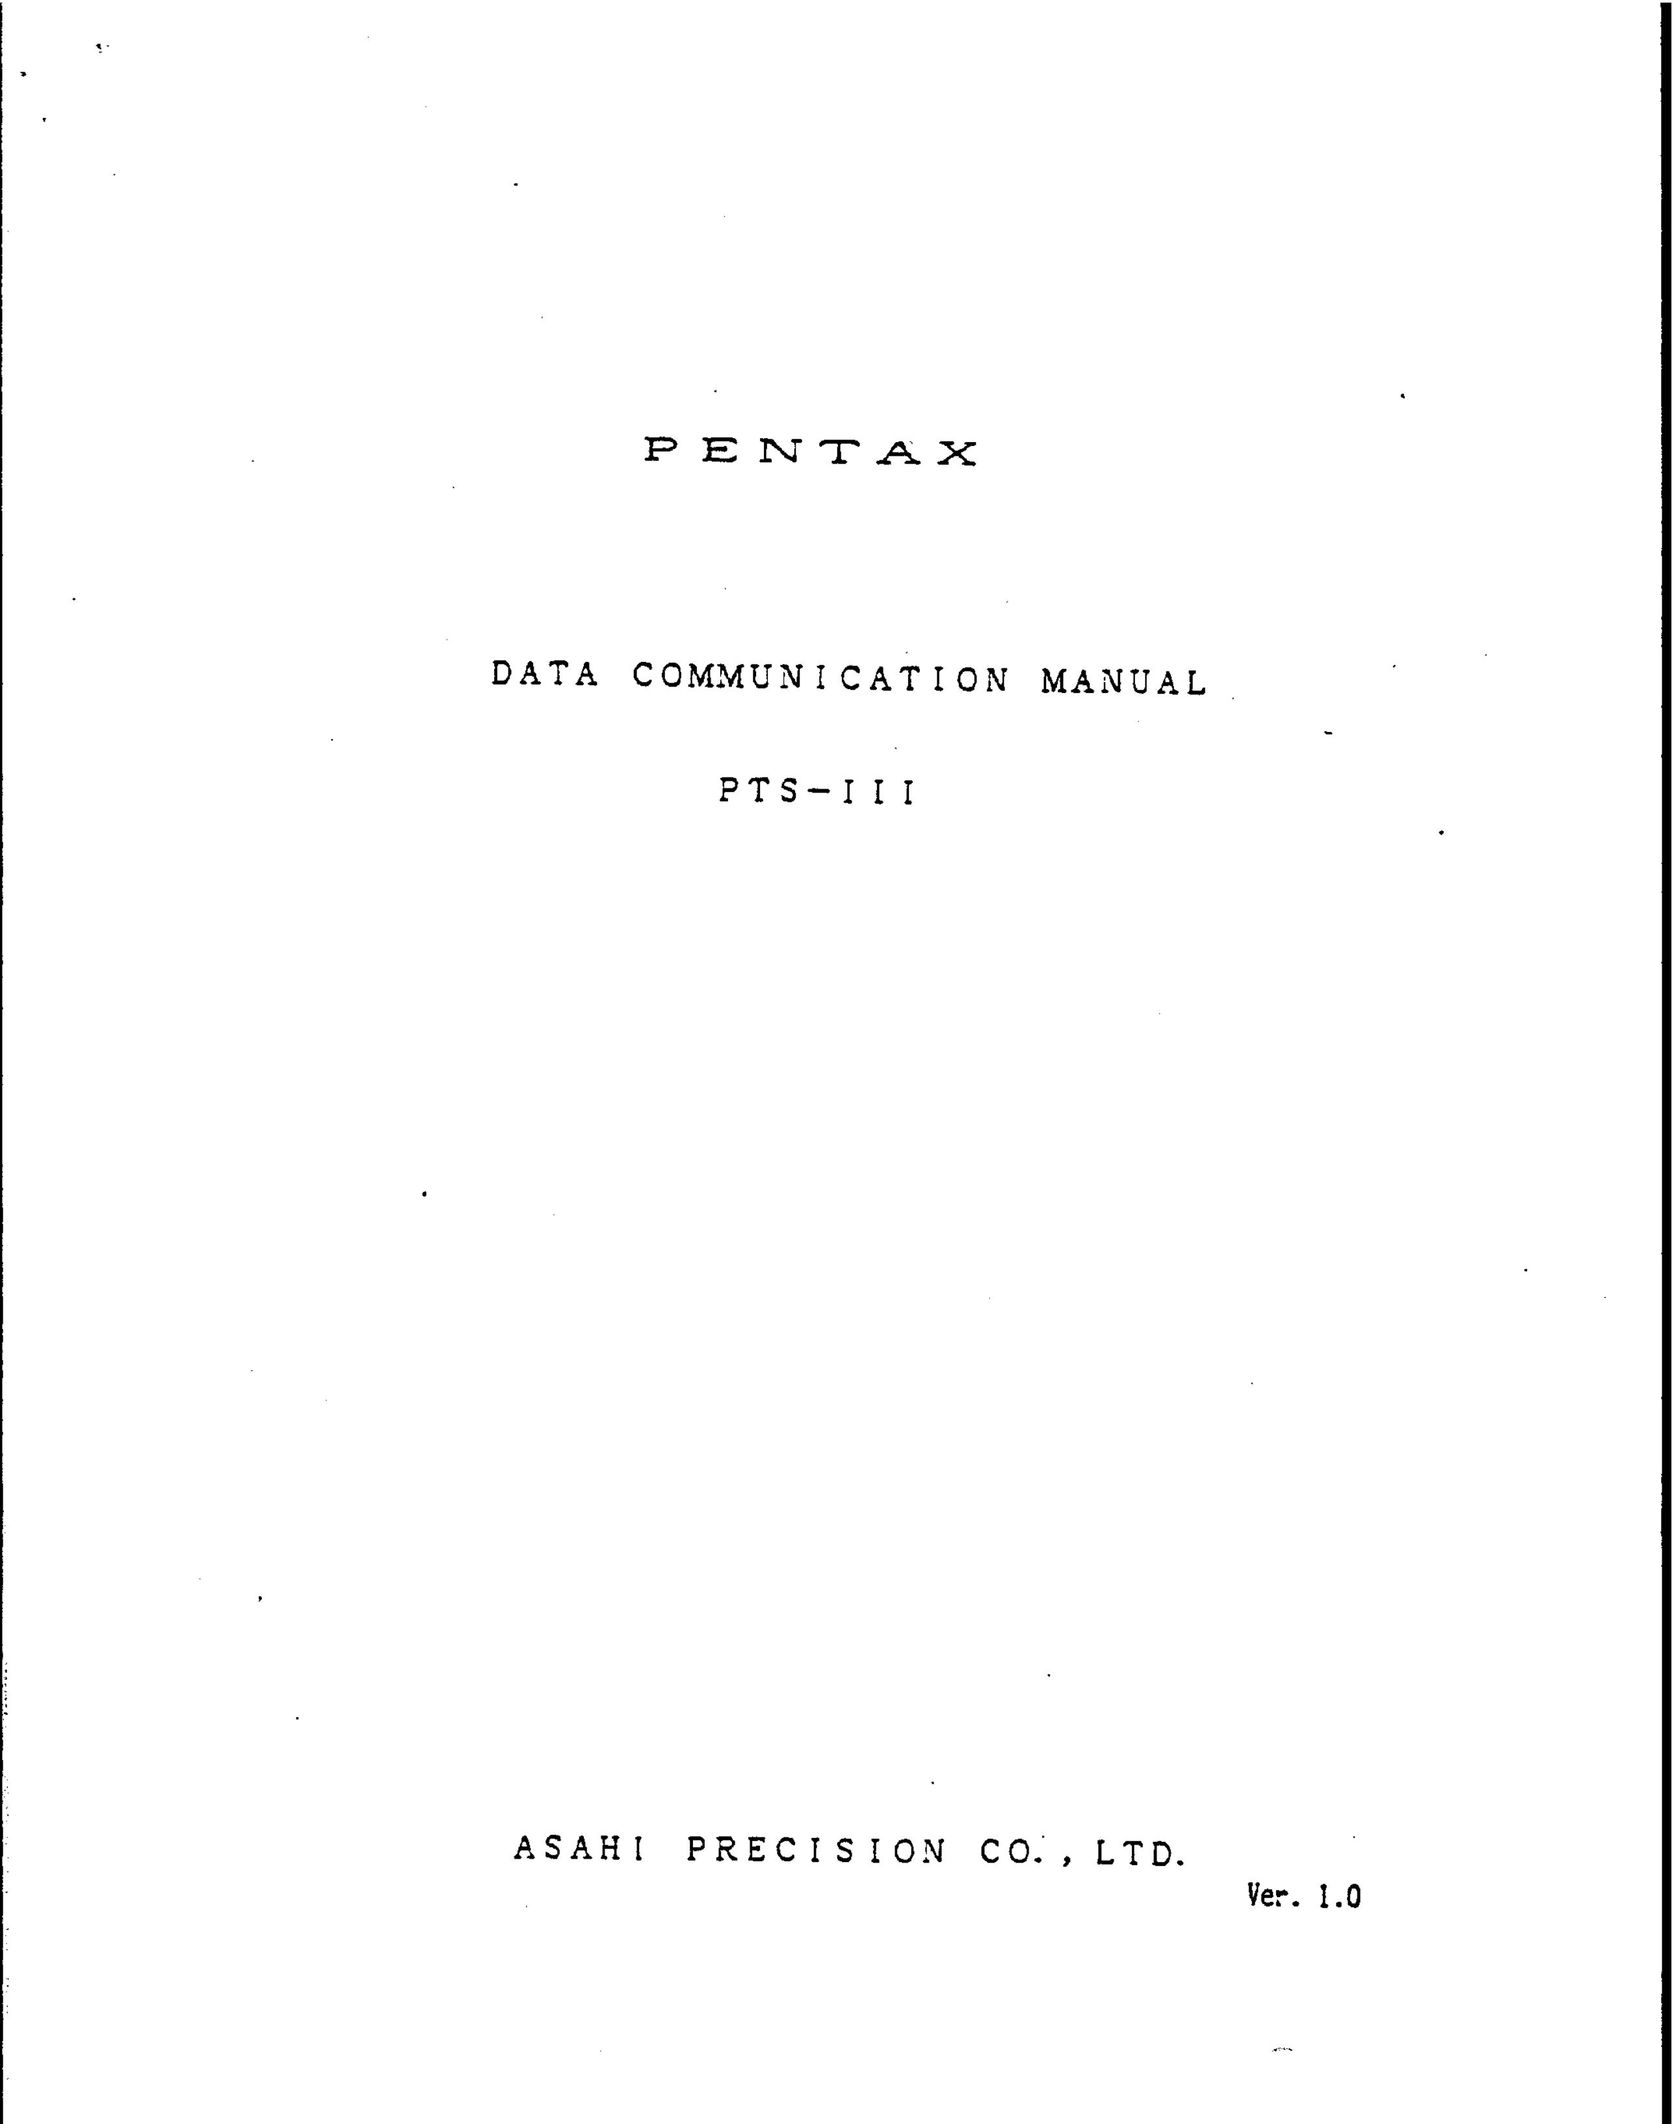 Pentax PTS-III Barcode Reader User Manual